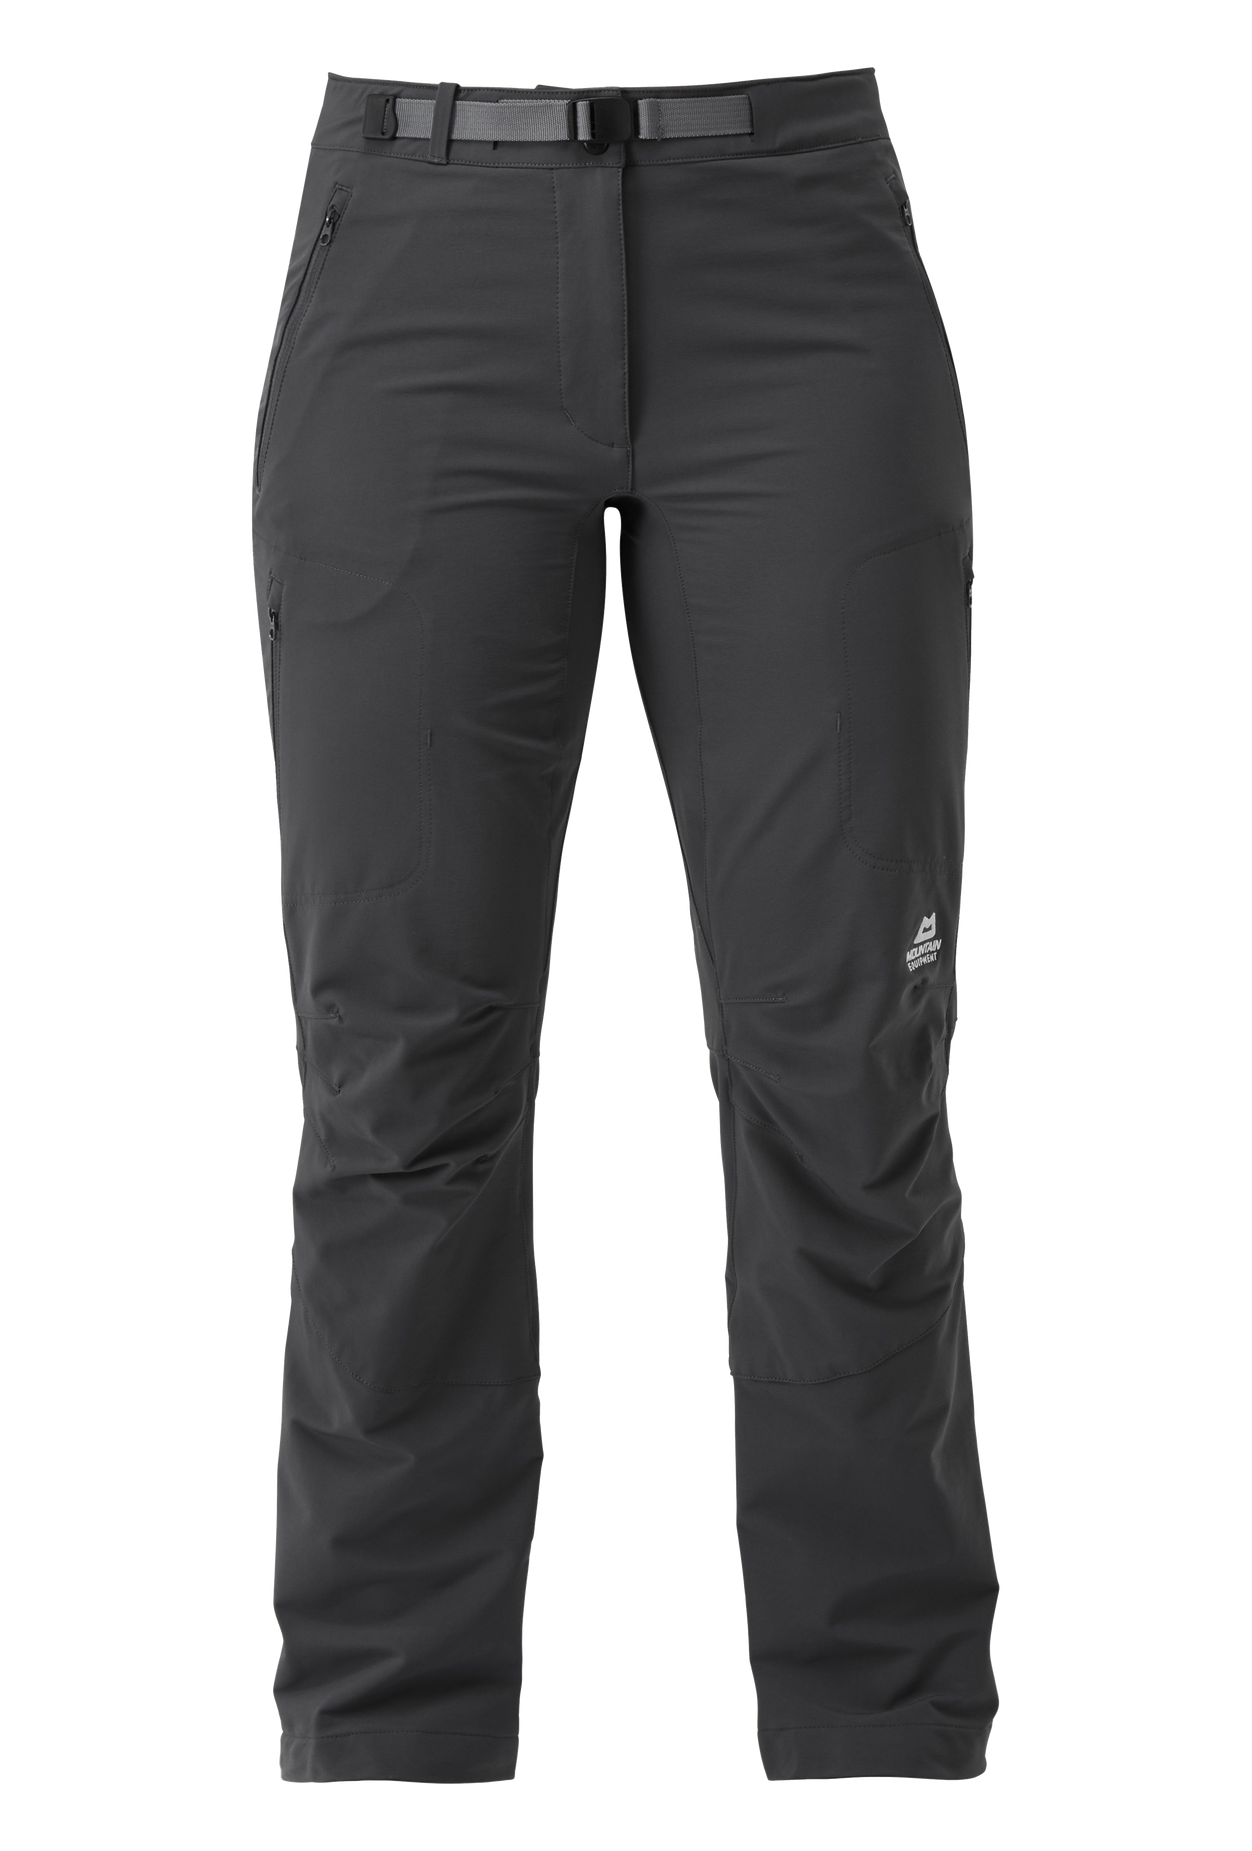 Mountain Equipment dámské softshellové kalhoty Chamois Wmns Pant - zkrácené Barva: Anvil Grey, Velikost: 8/XS